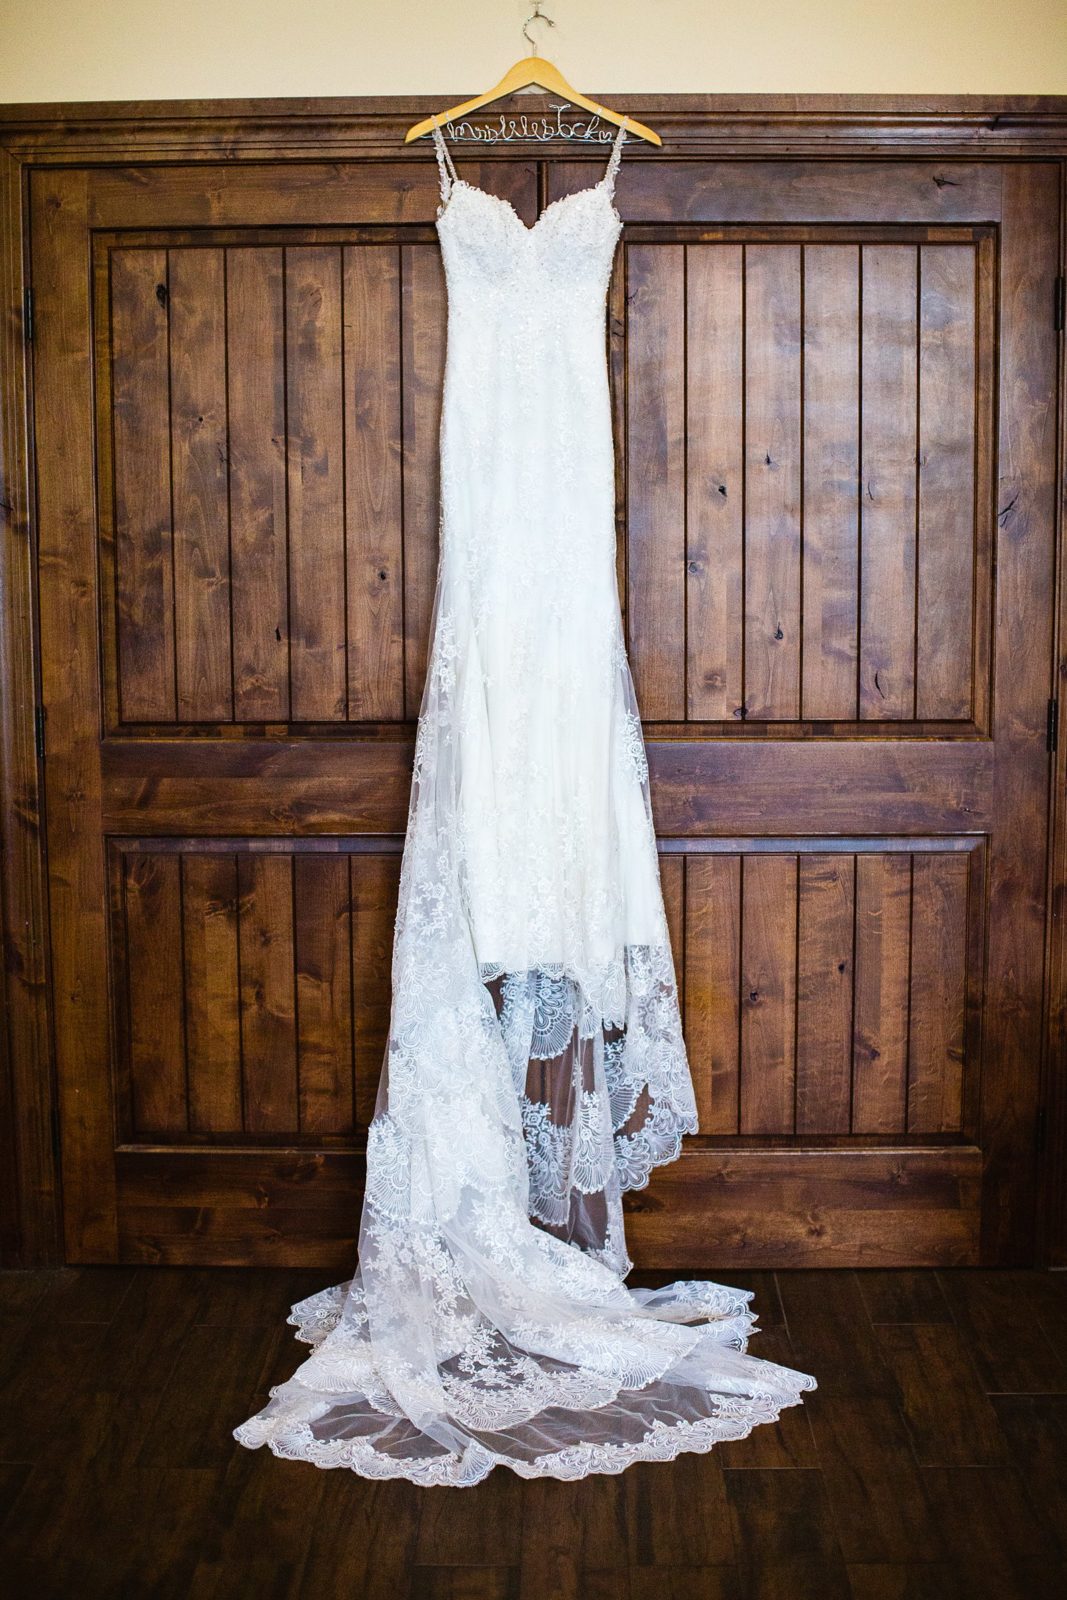 Bride's romantic lace wedding dress on custom Mrs. wooden hanger by PMA Photography.